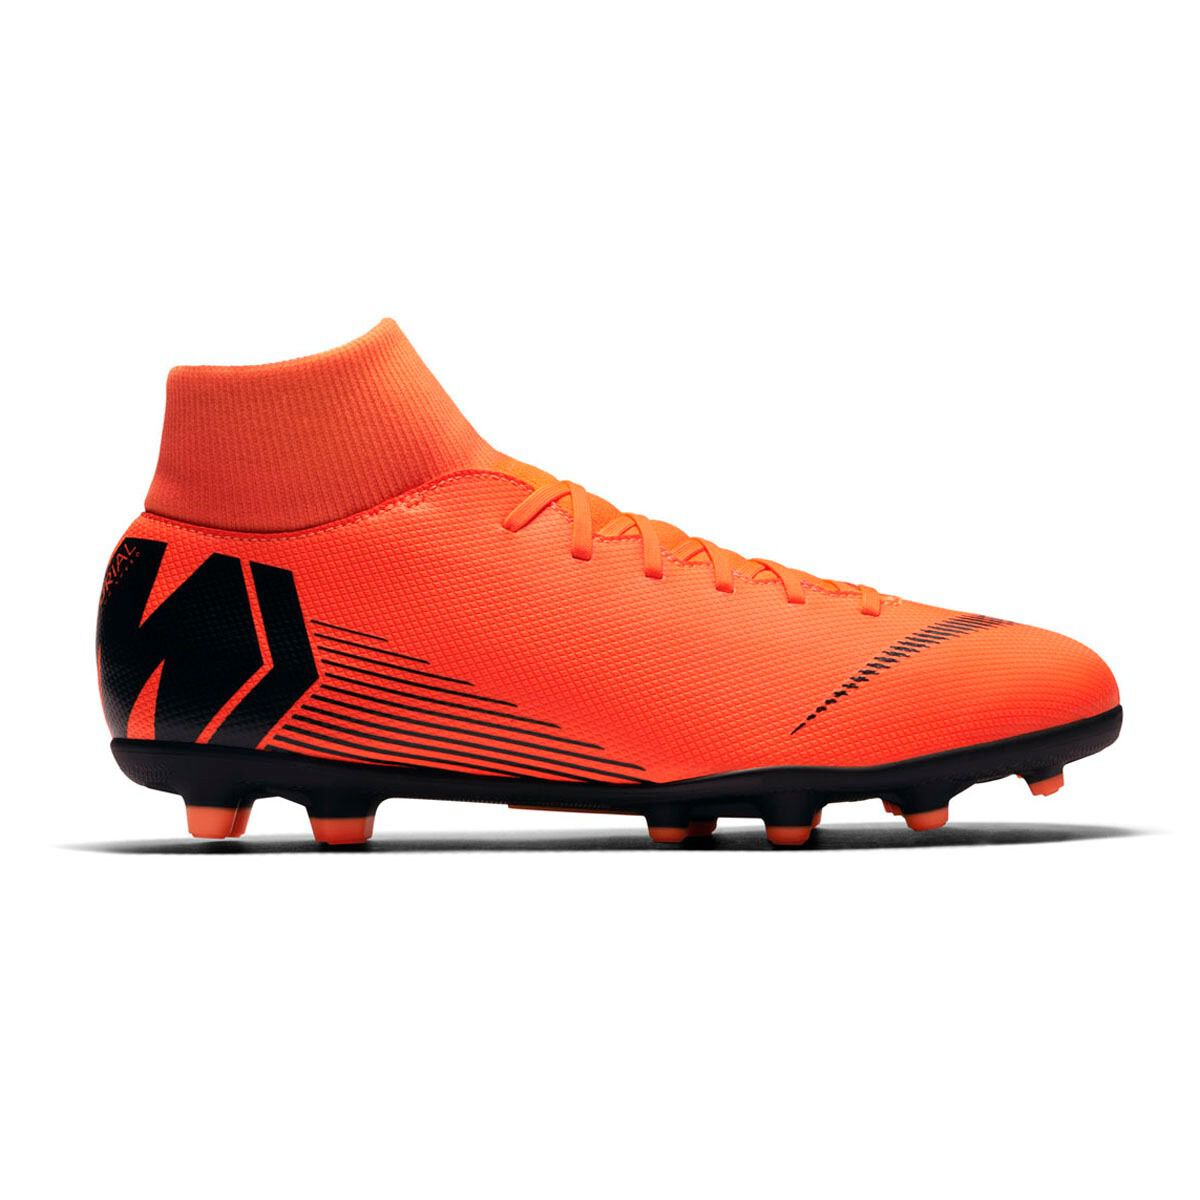 orange and black football boots